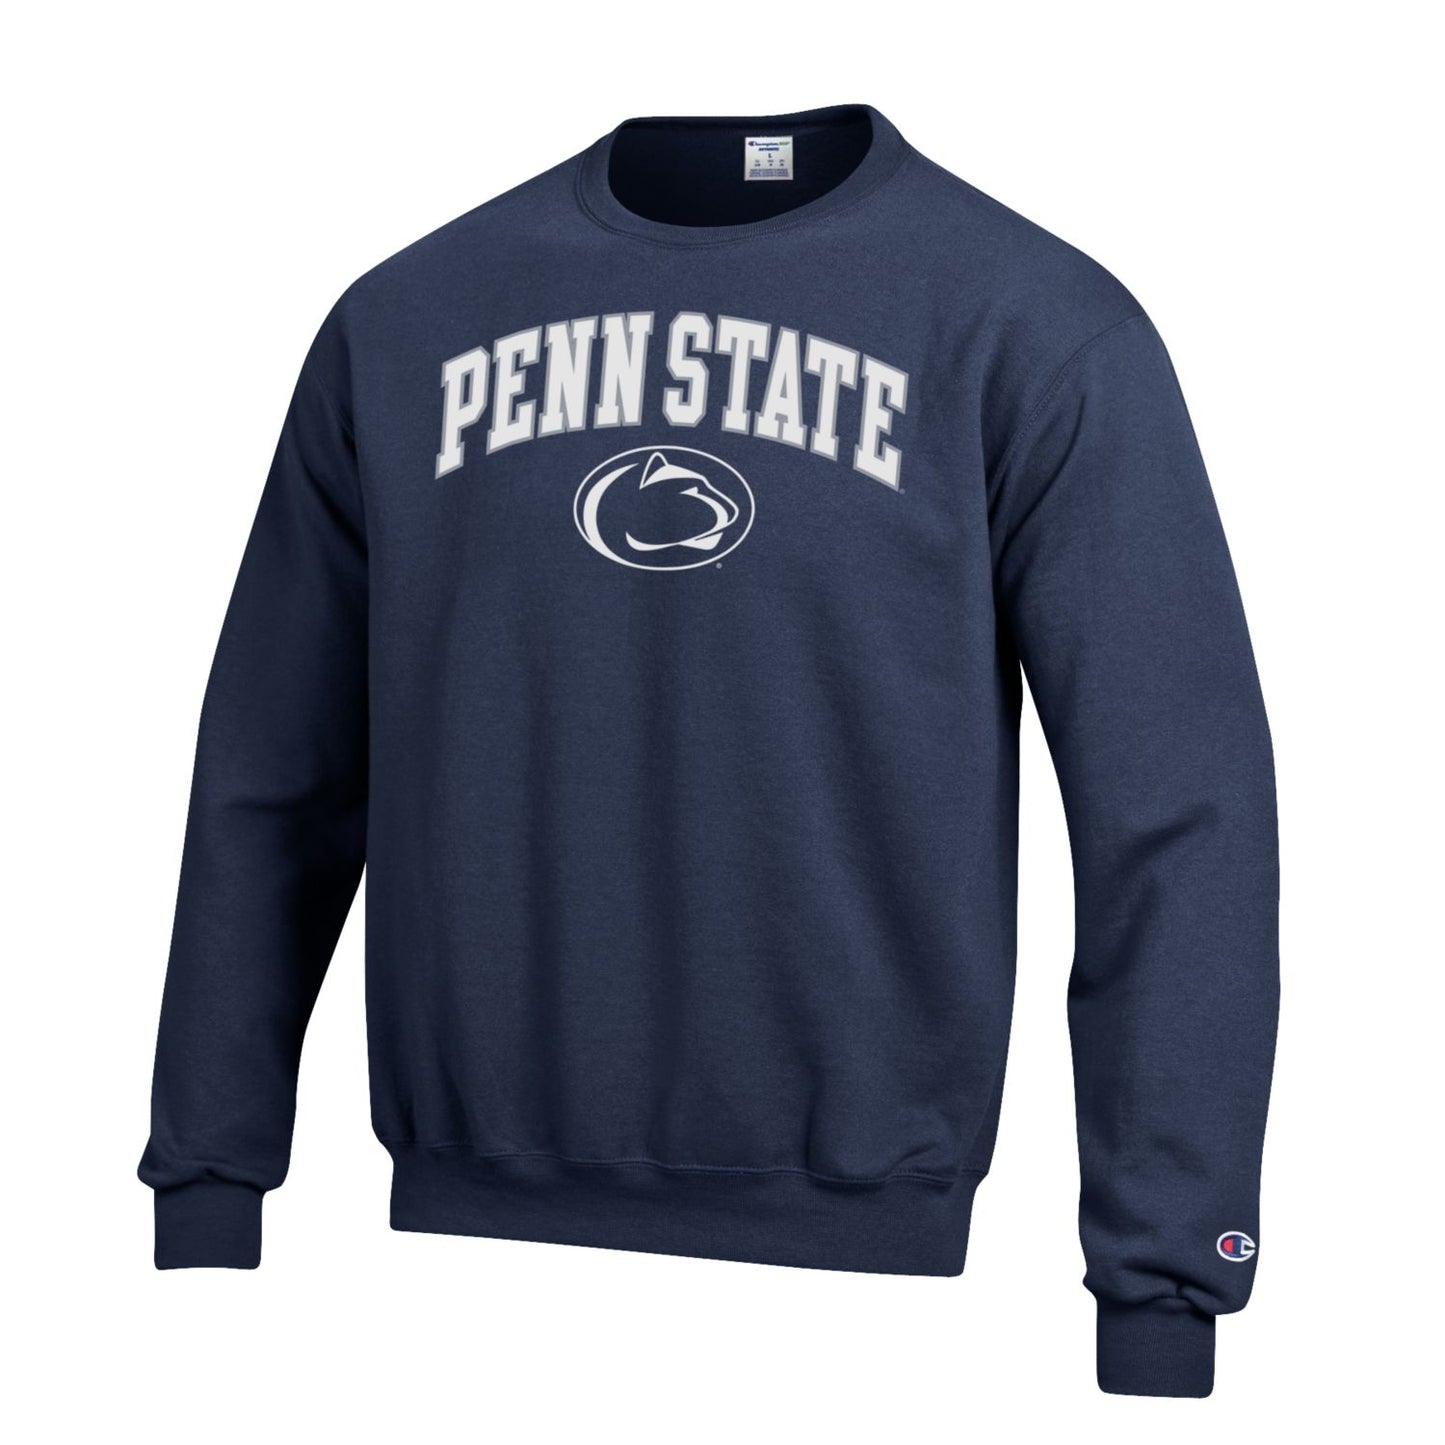 Penn State Champion Men's Sweatshirt - Navy-Shop College Wear